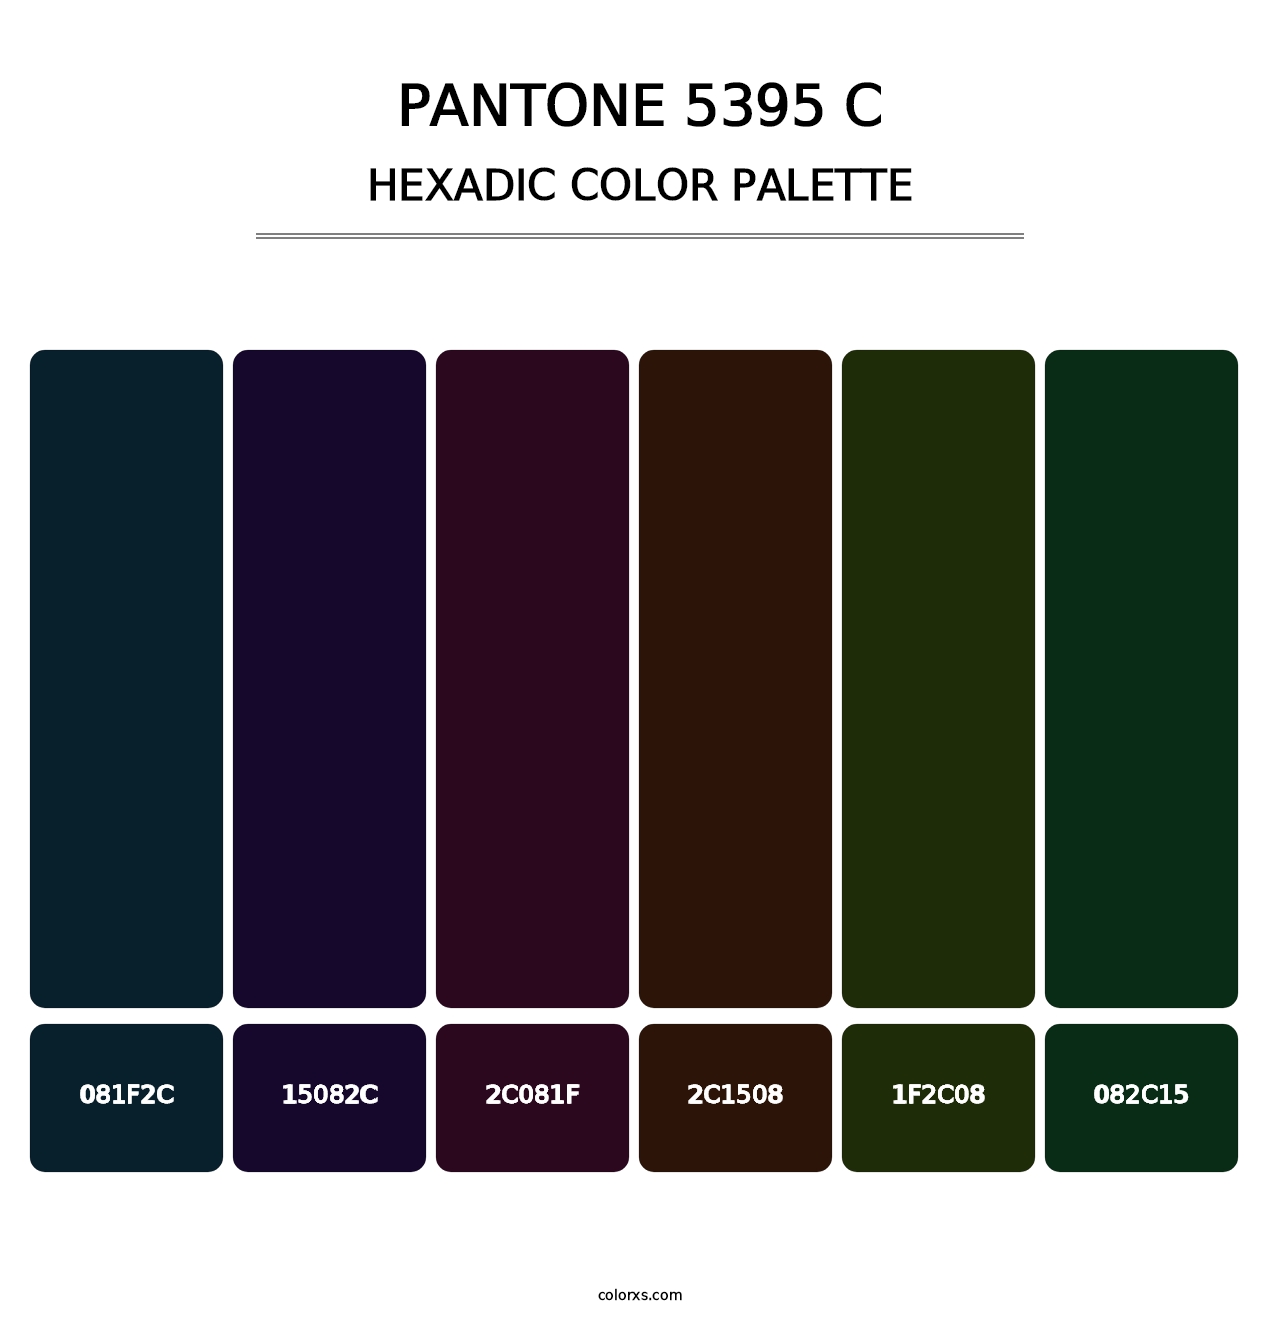 PANTONE 5395 C - Hexadic Color Palette